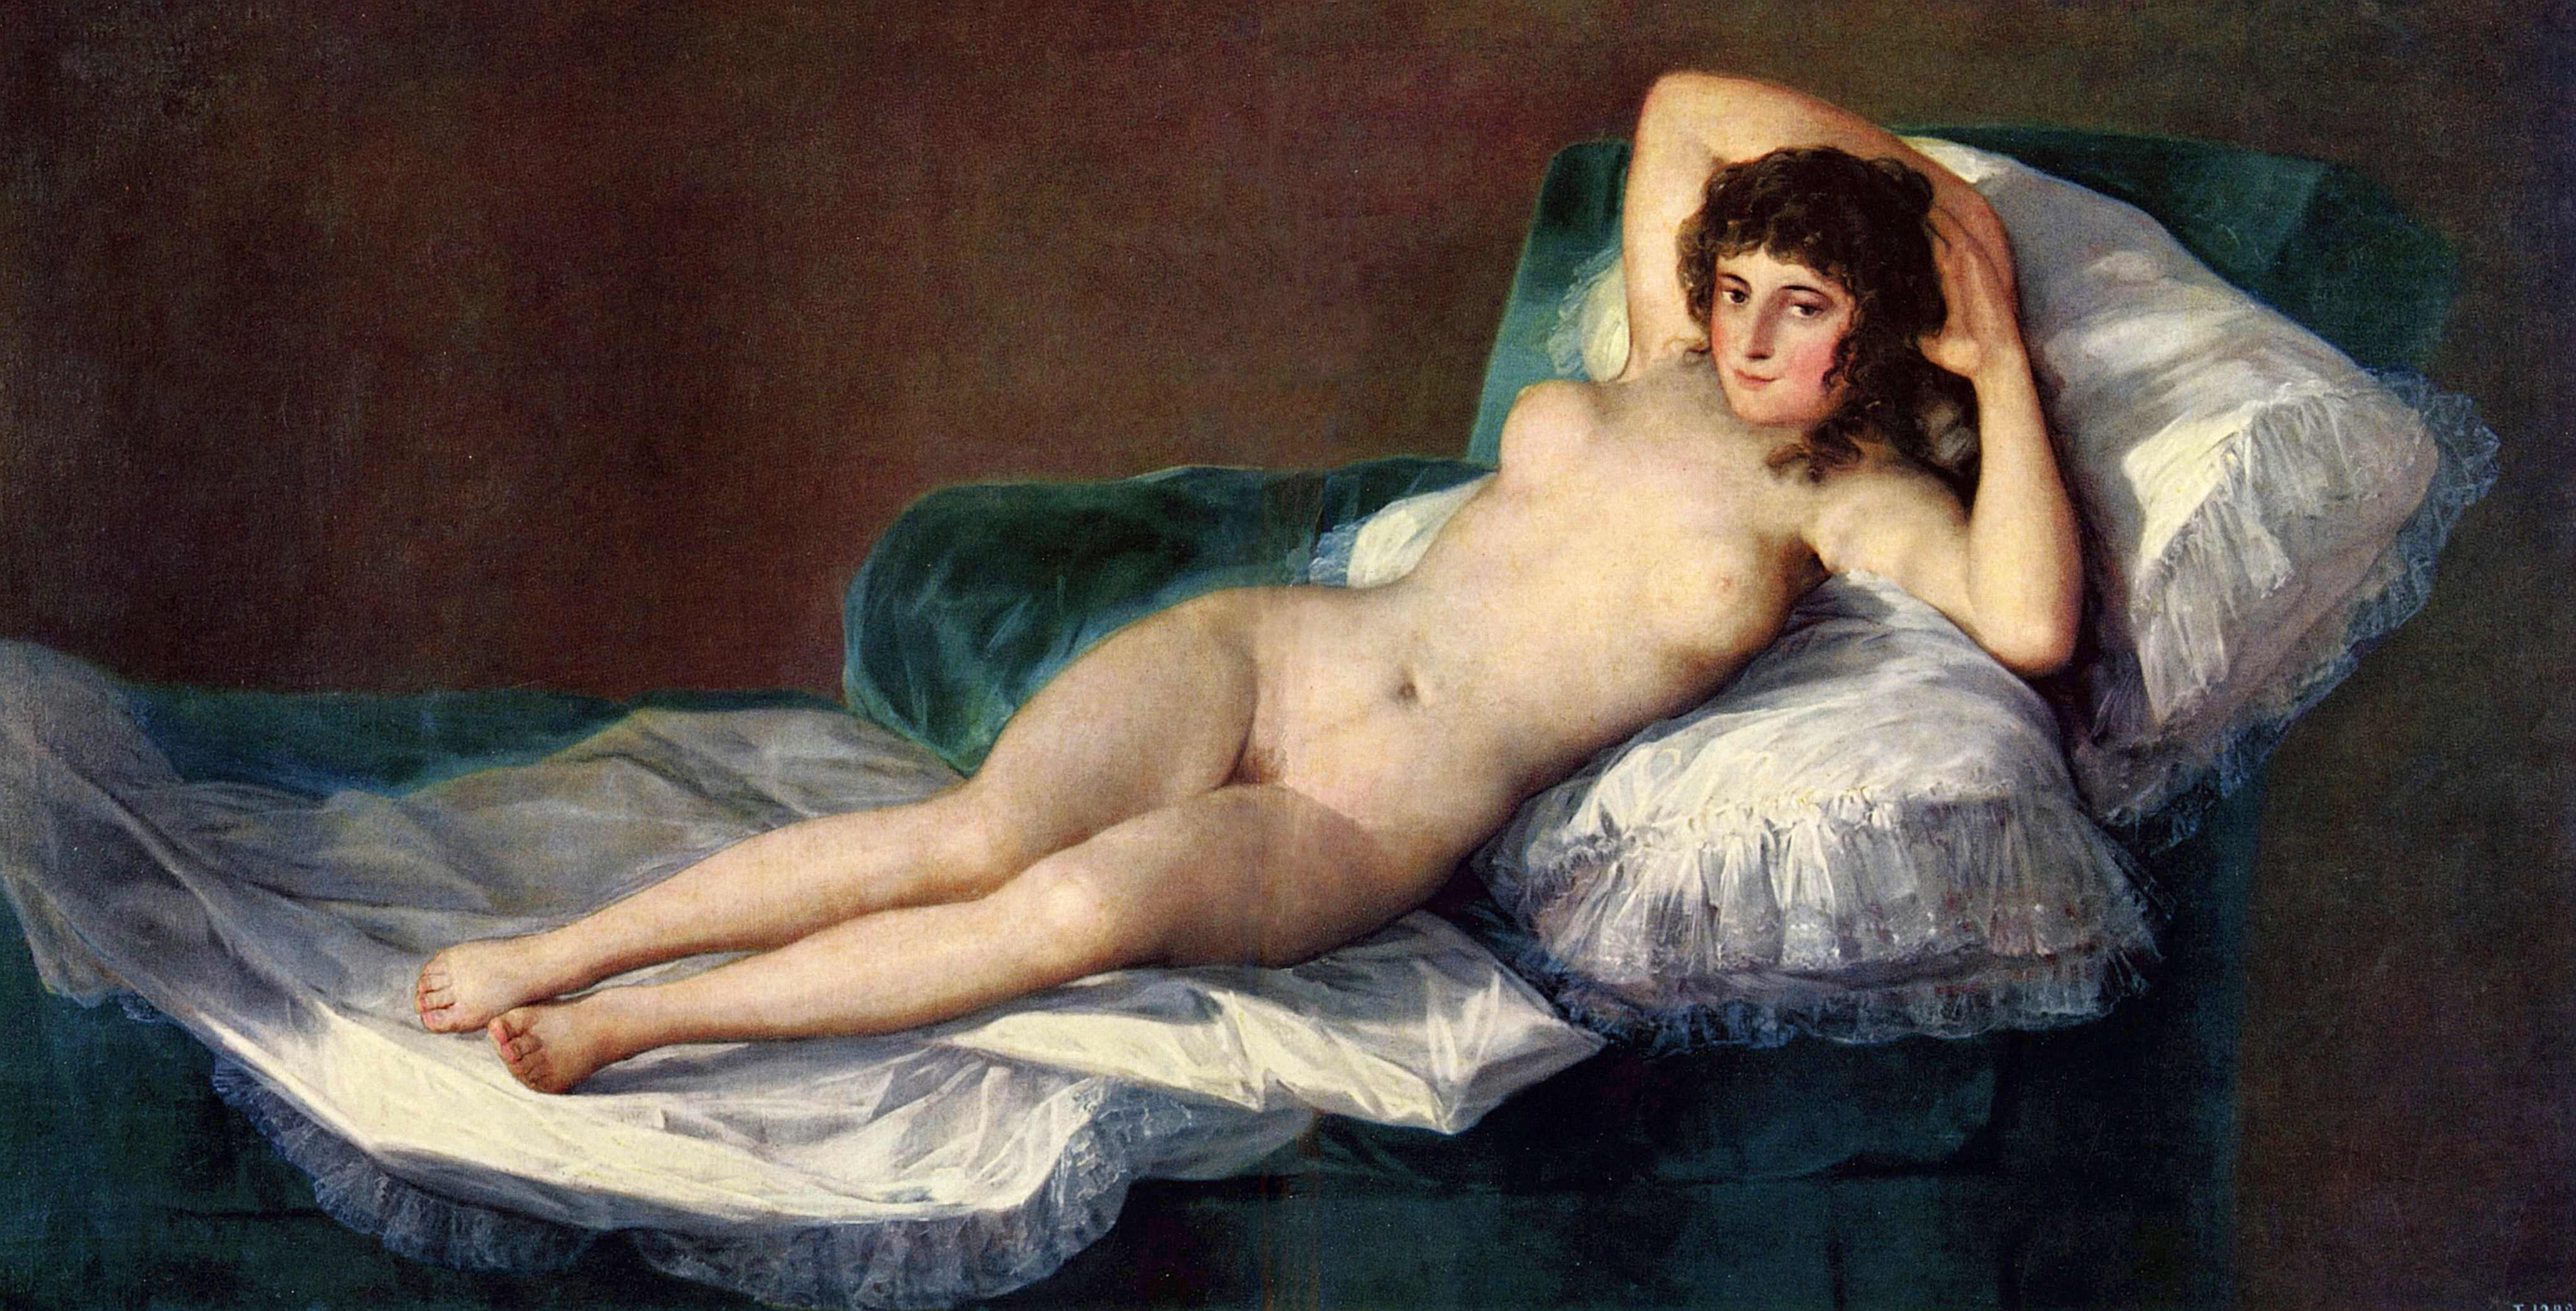 Goya Francisco de - Die nackte Maja